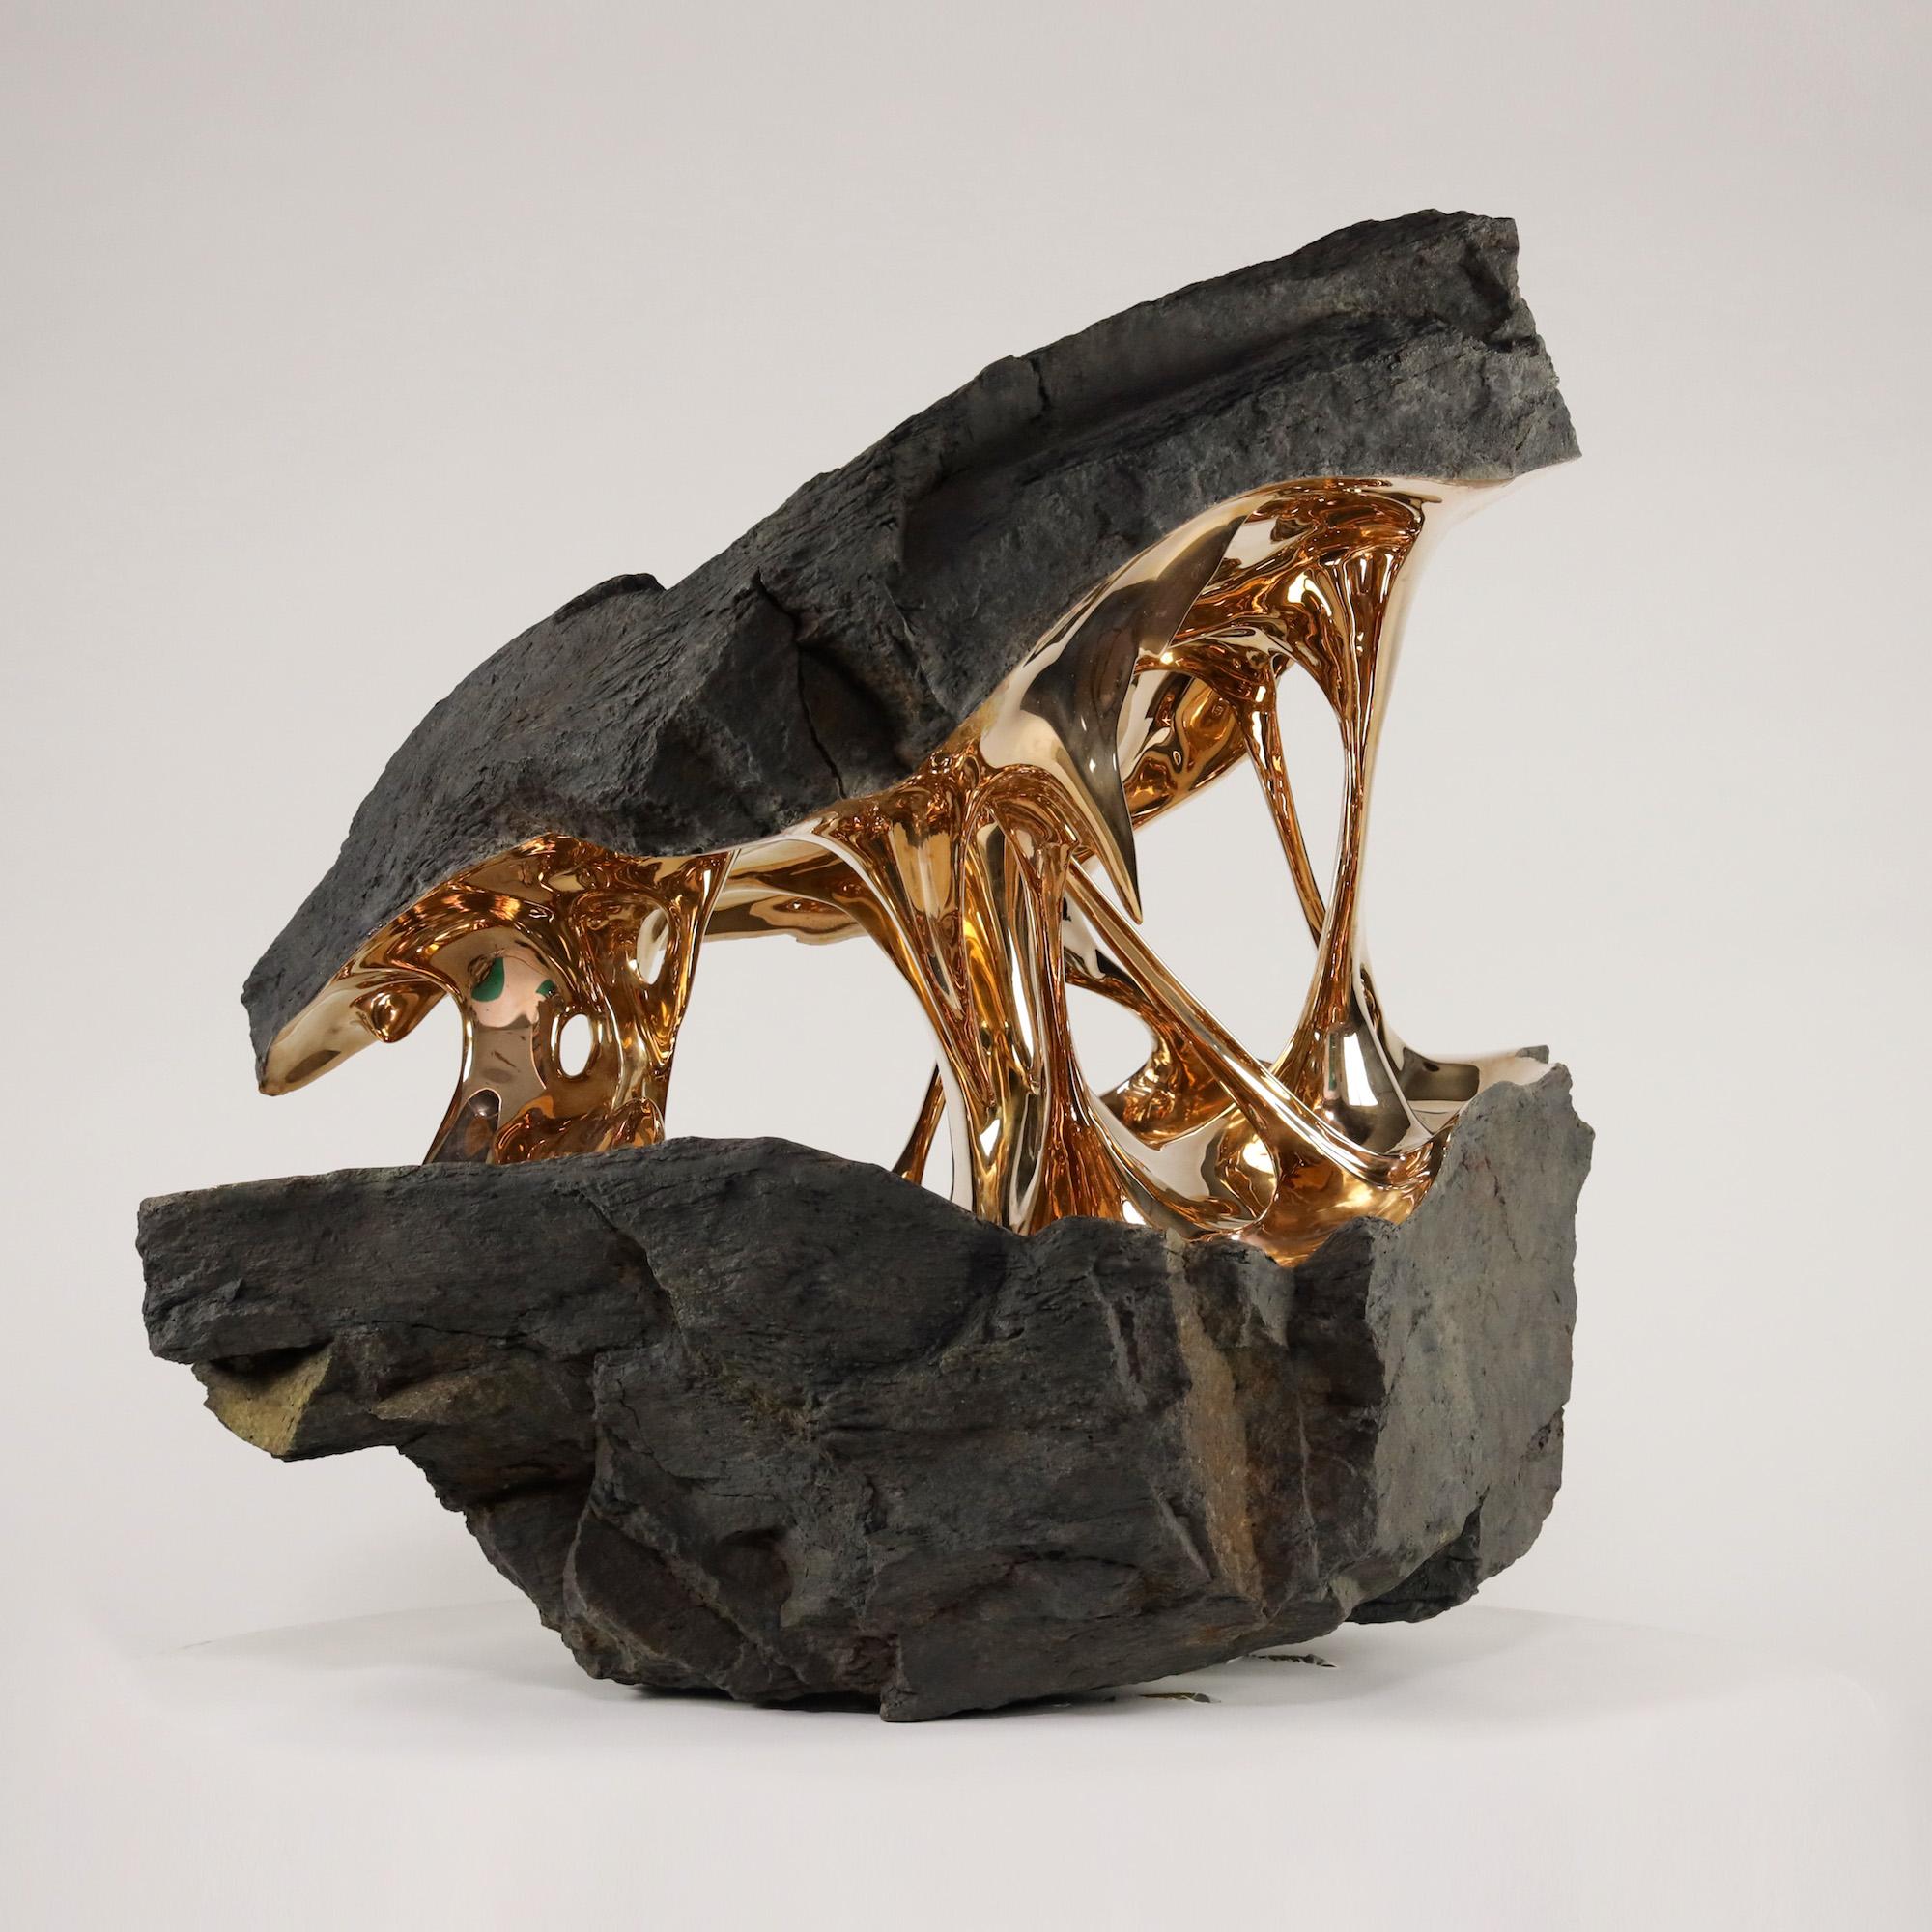 Gaïa by Romain Langlois - Rock-like bronze sculpture, golden, abstract For Sale 1